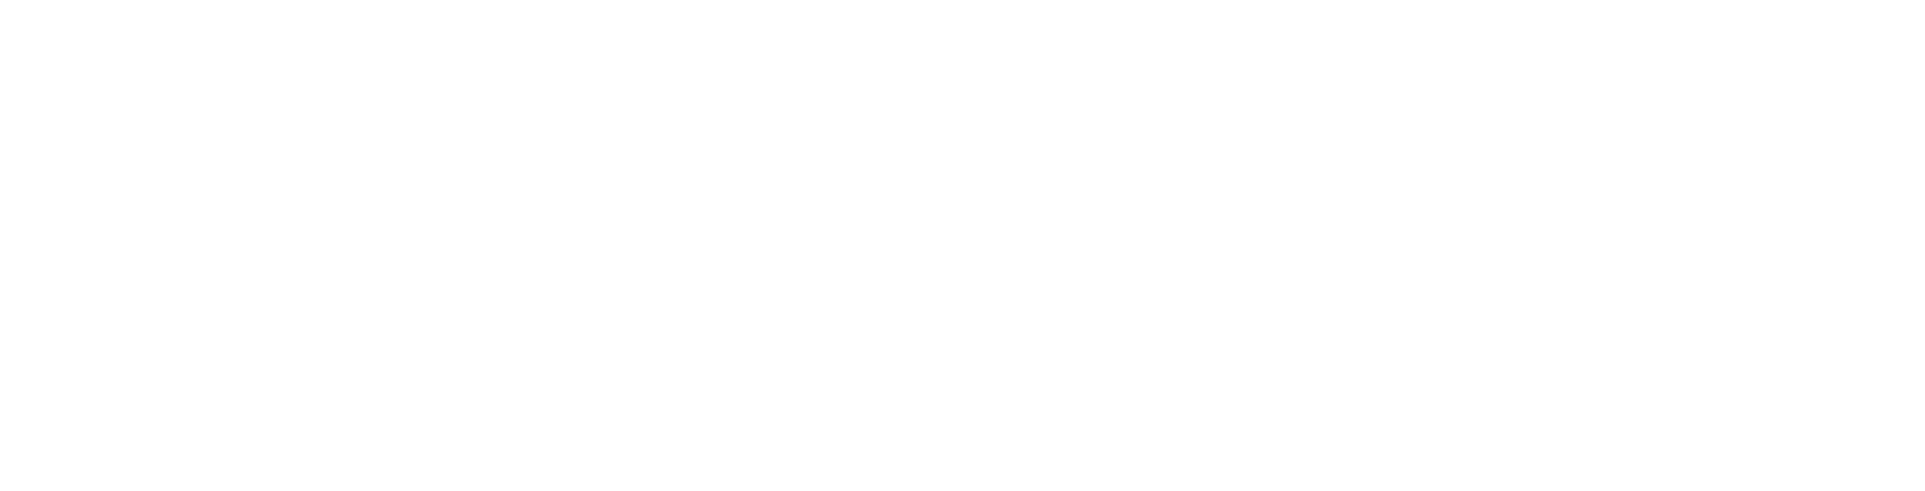 eyespa logo crop